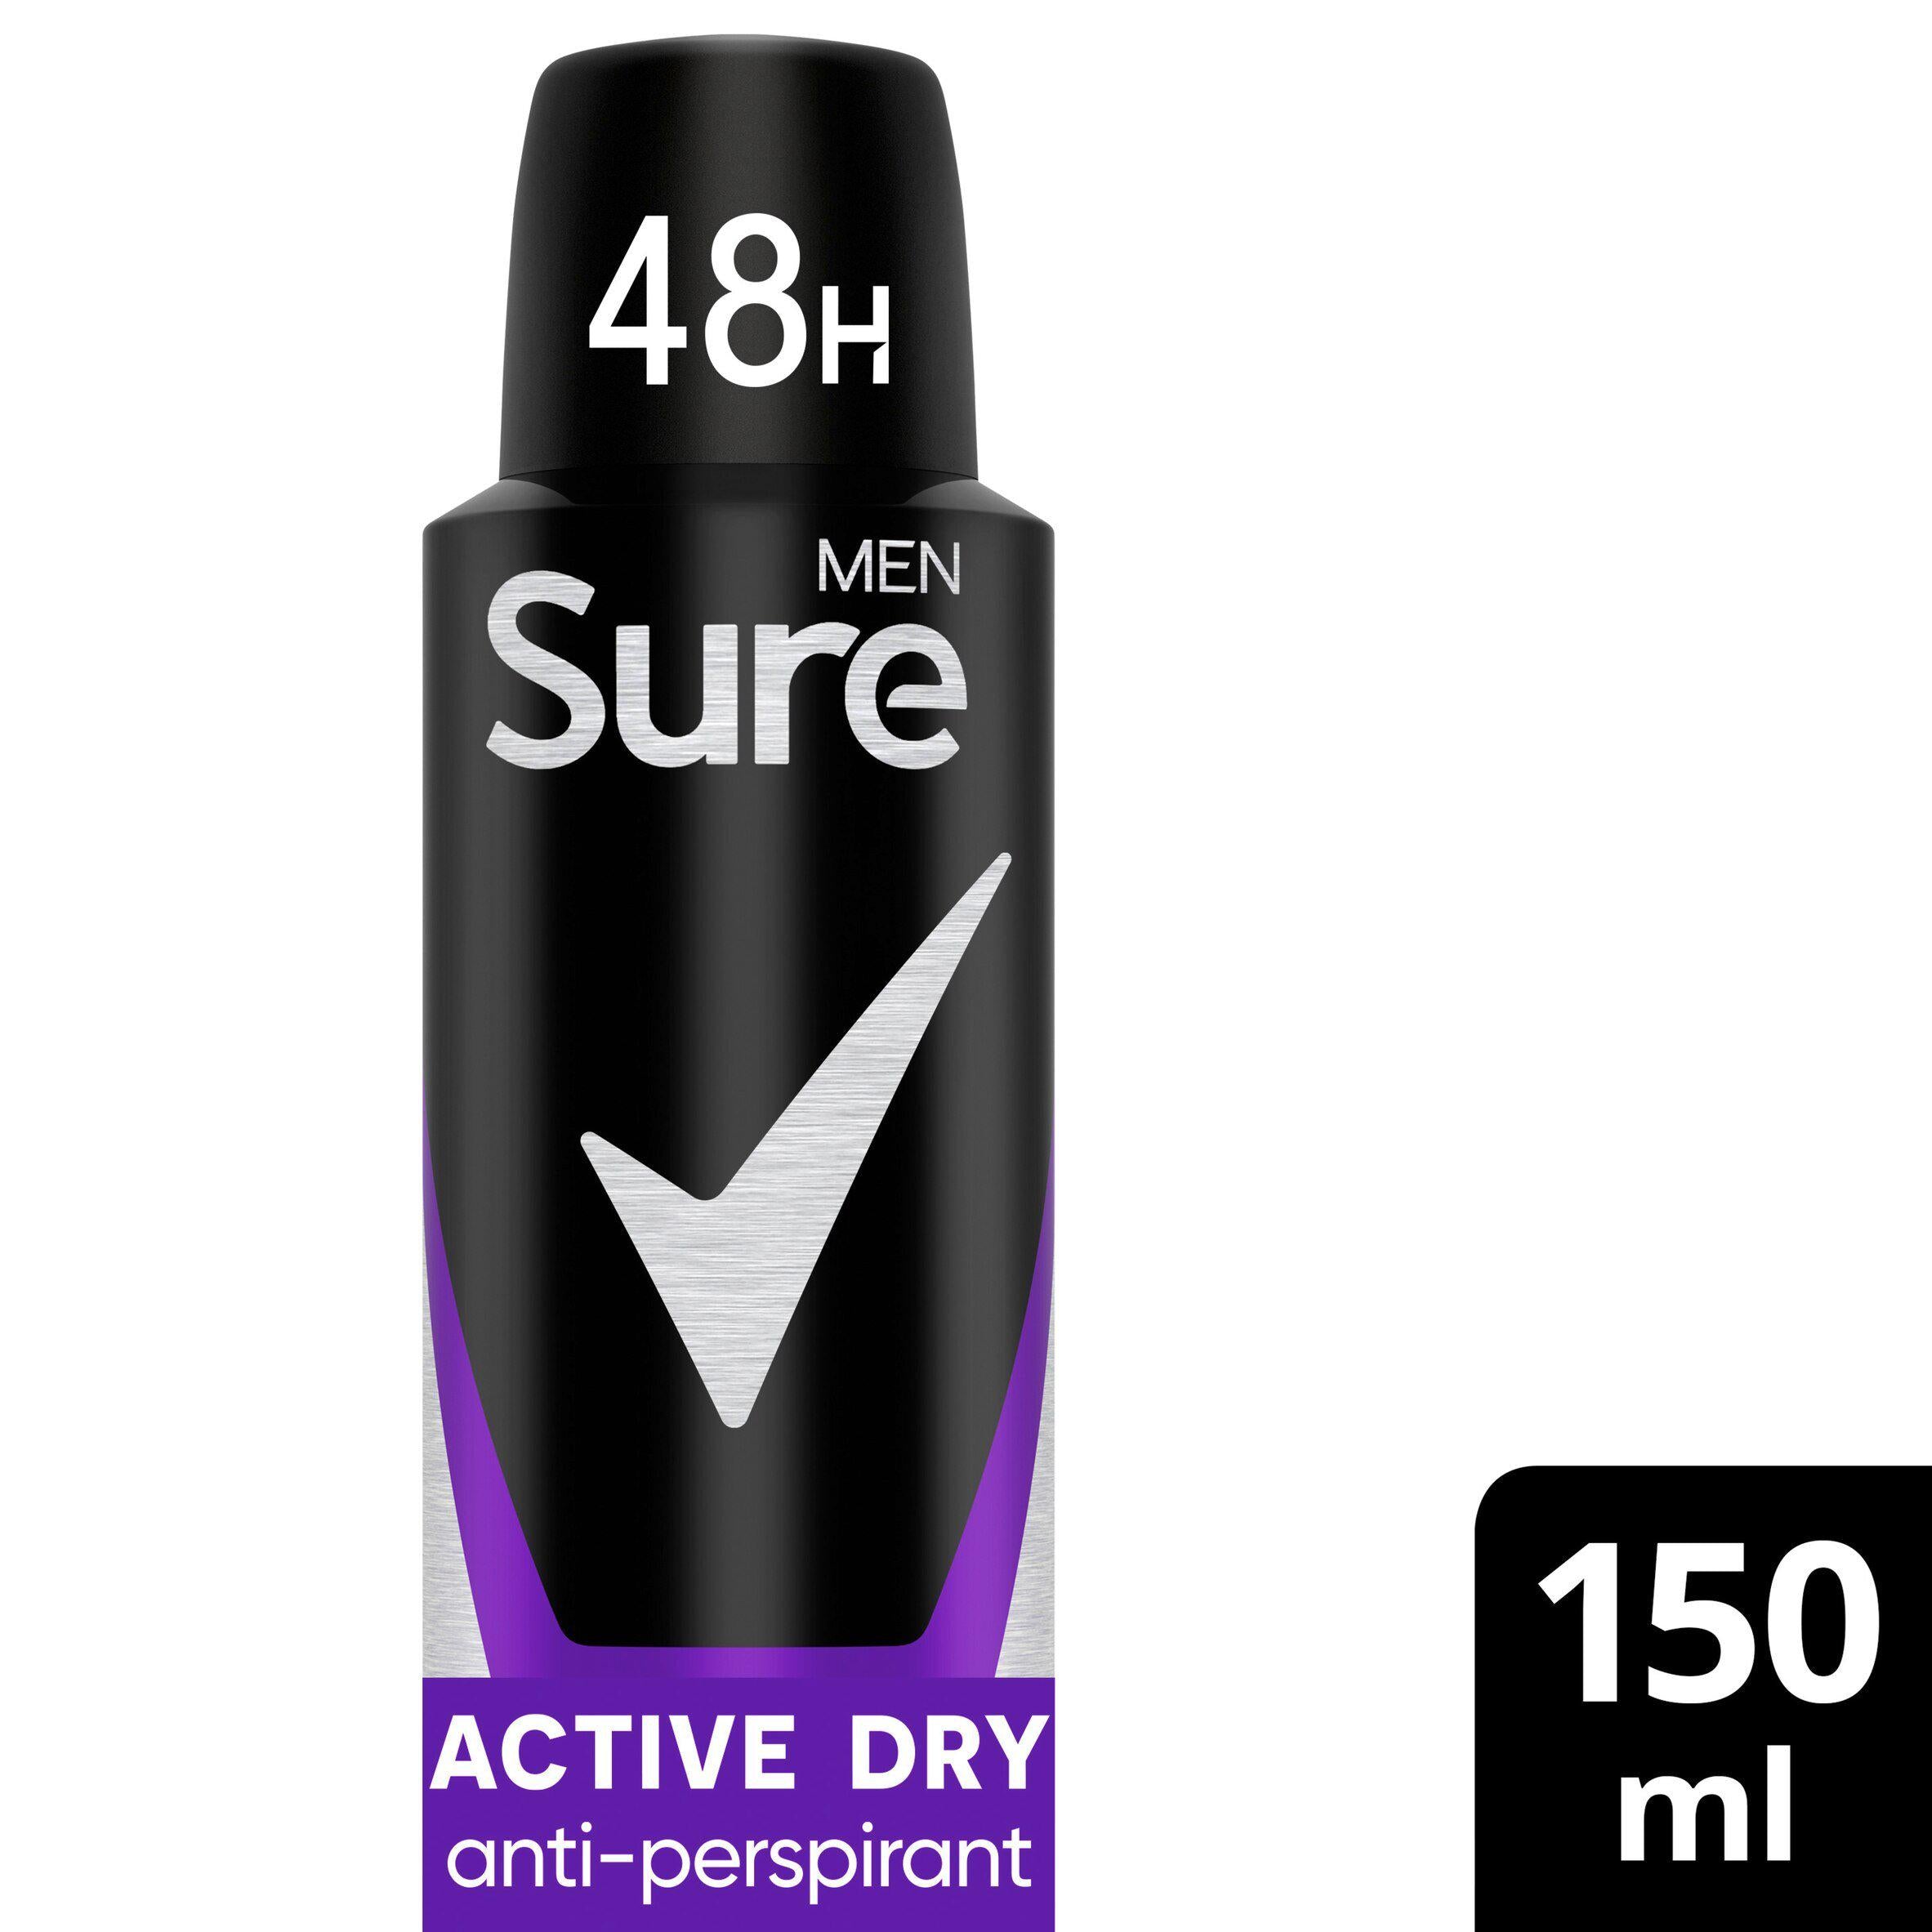 Sure 48hr Men Active Dry Anti-Perspirant Deodorant Aerosol 150ml deodorants & body sprays Sainsburys   